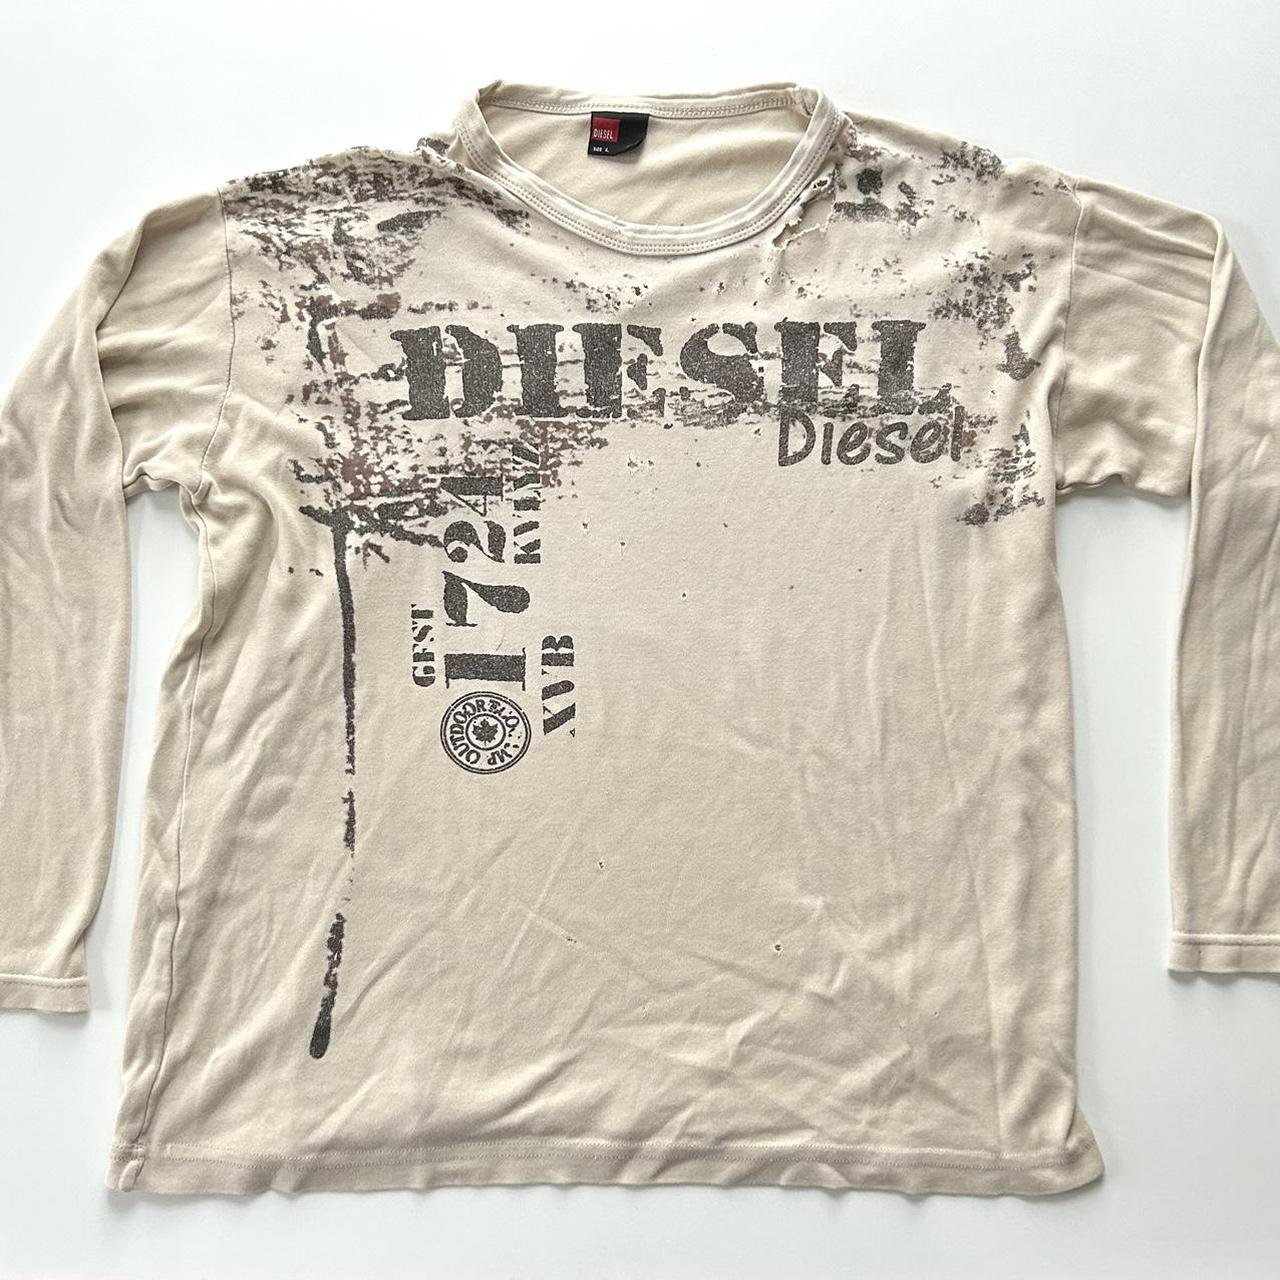 Diesel Women's Cream and Black T-shirt